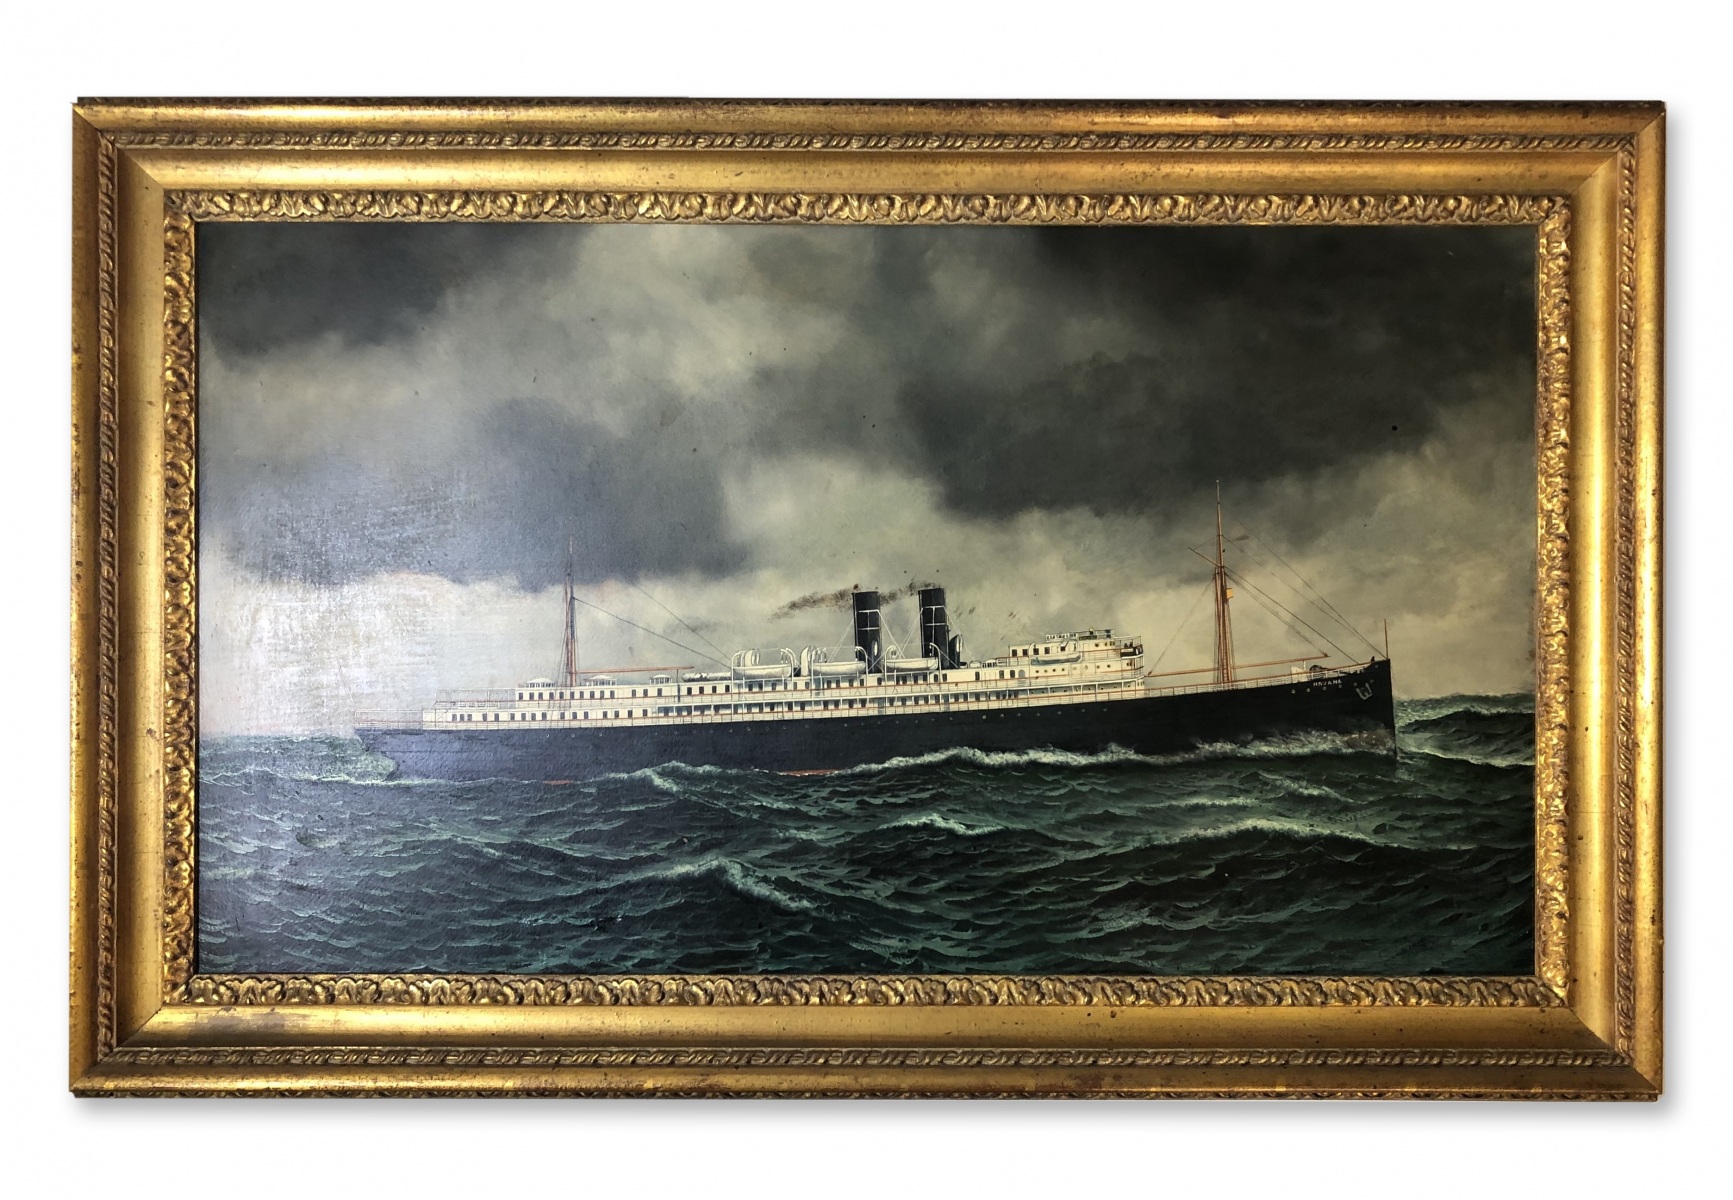 SS Havana, late 19th-early 20th century